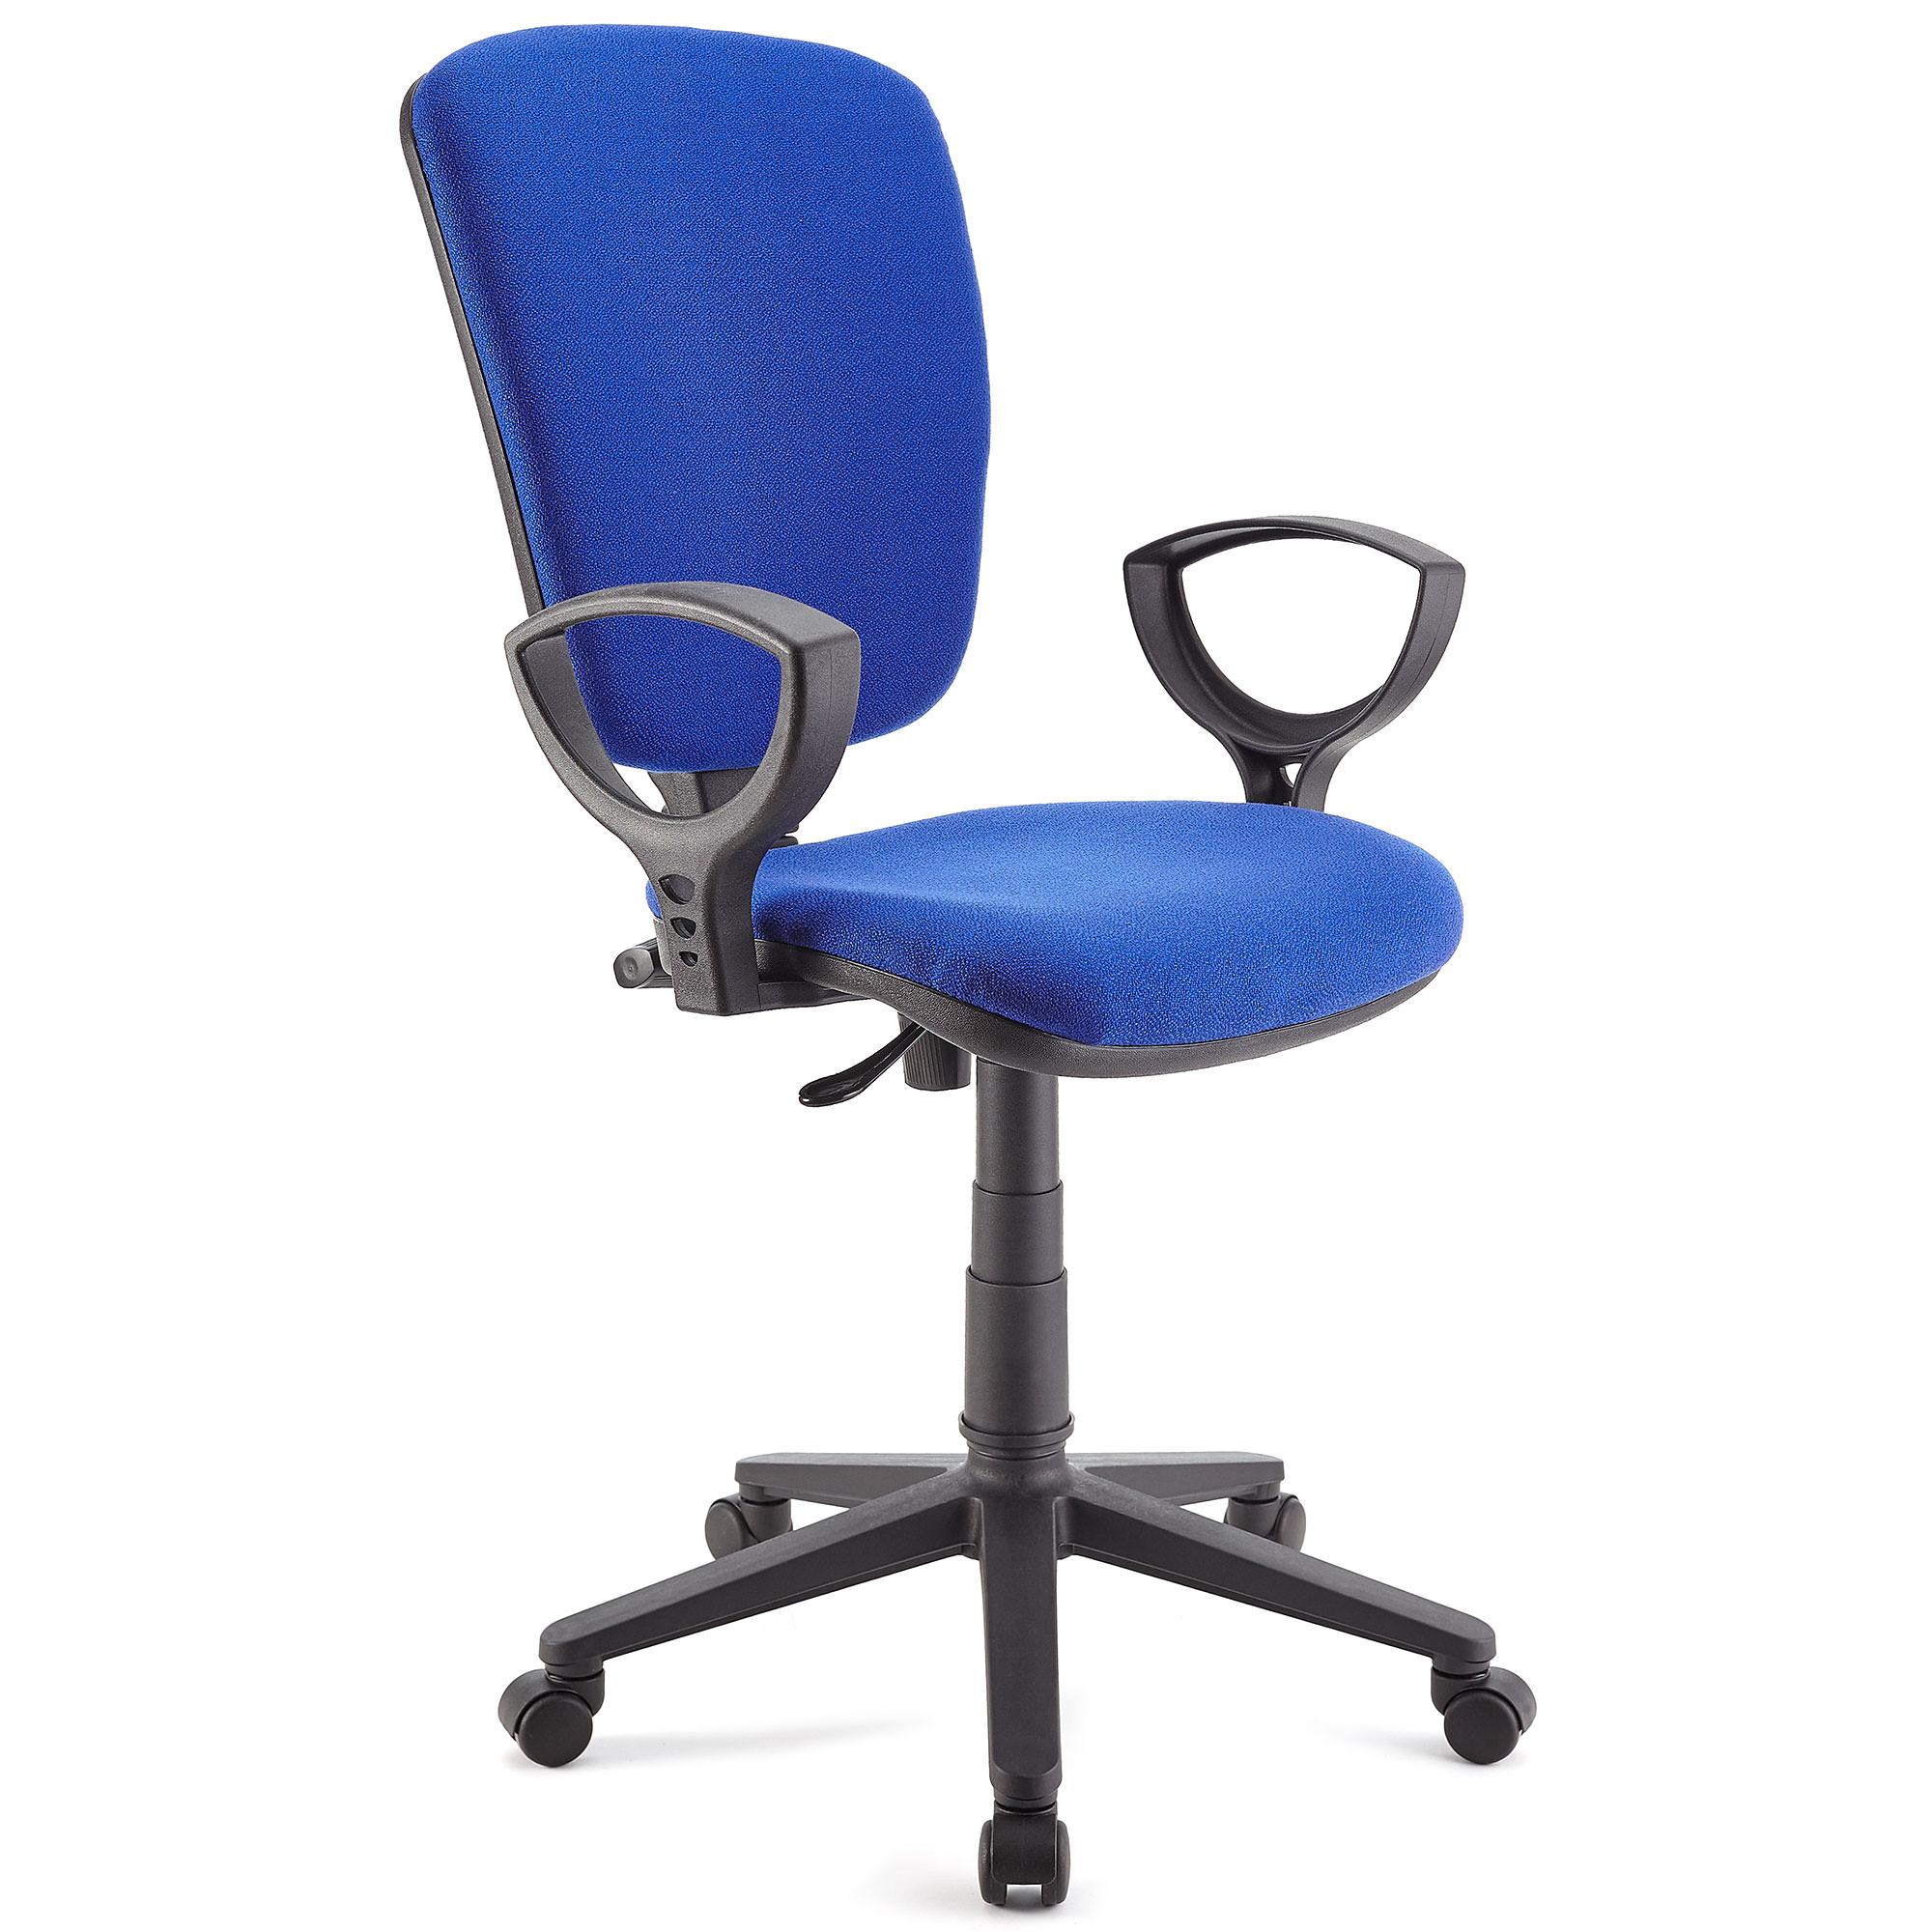 Bürostuhl KALIPSO, verstellbare Rückenlehne, widerstandsfähiger Stoffbezug, Farbe Blau